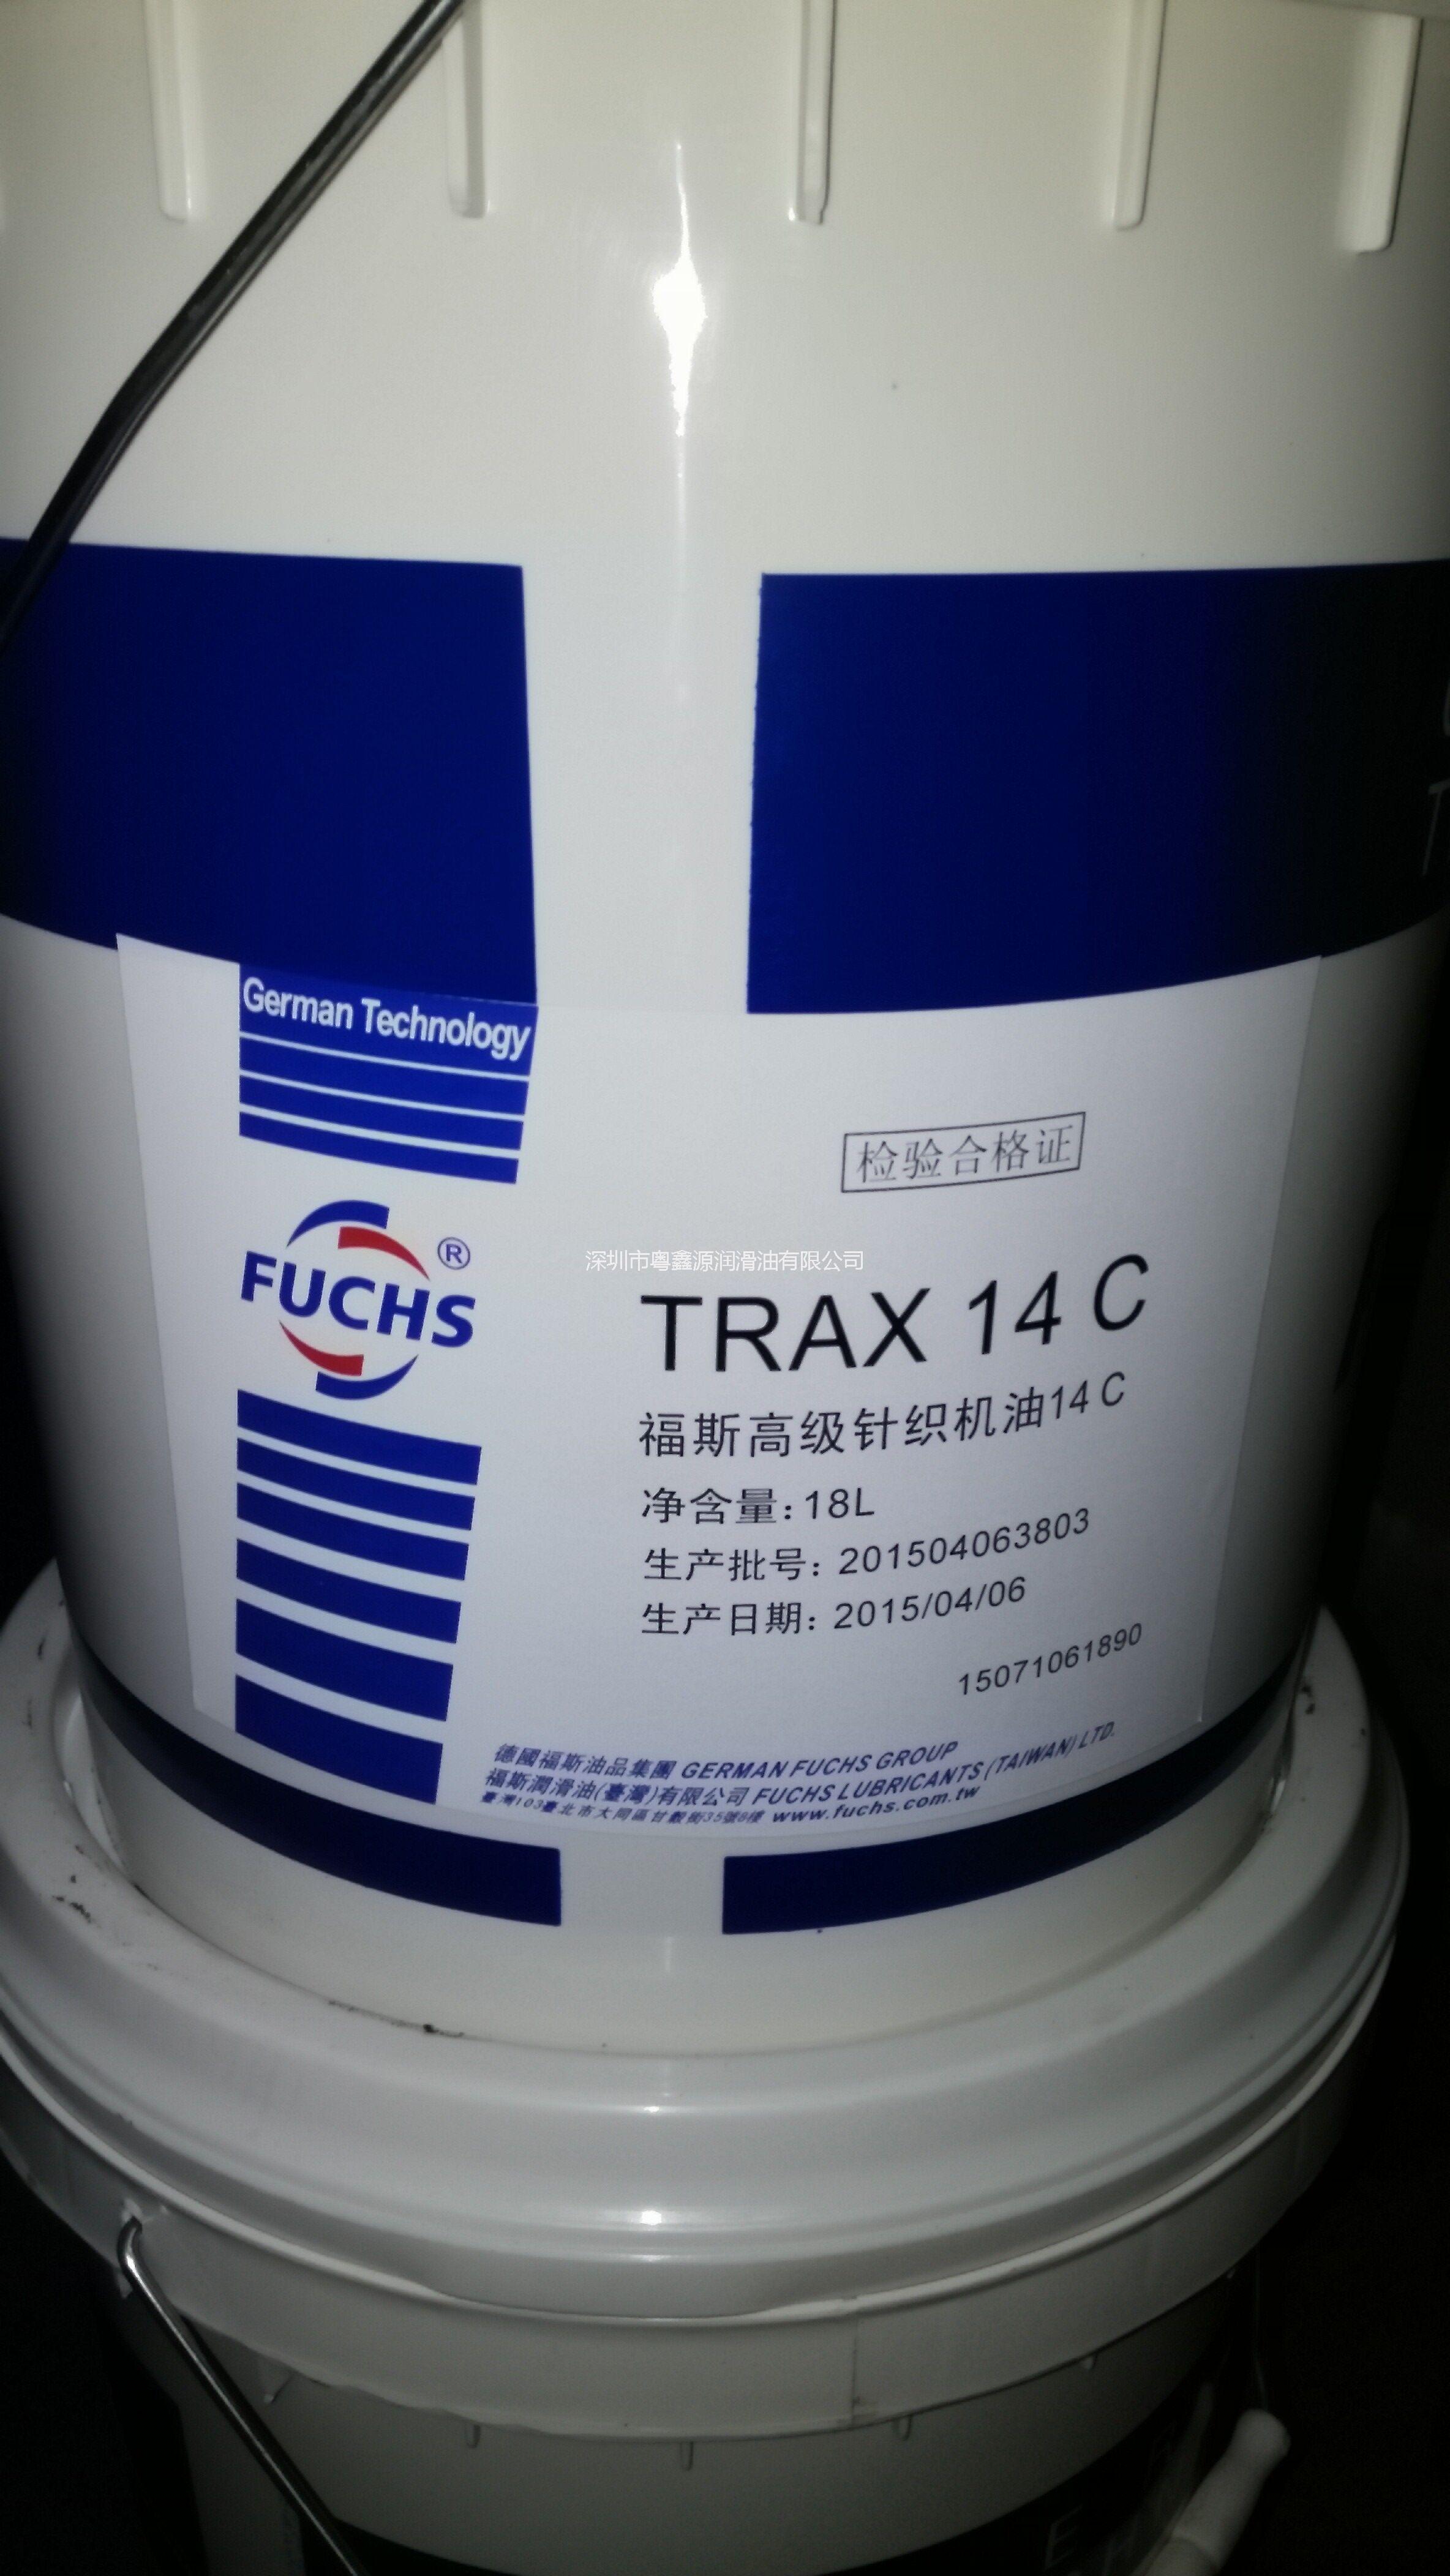 FUCHS TRAX 14 C福斯高级针织机油批发